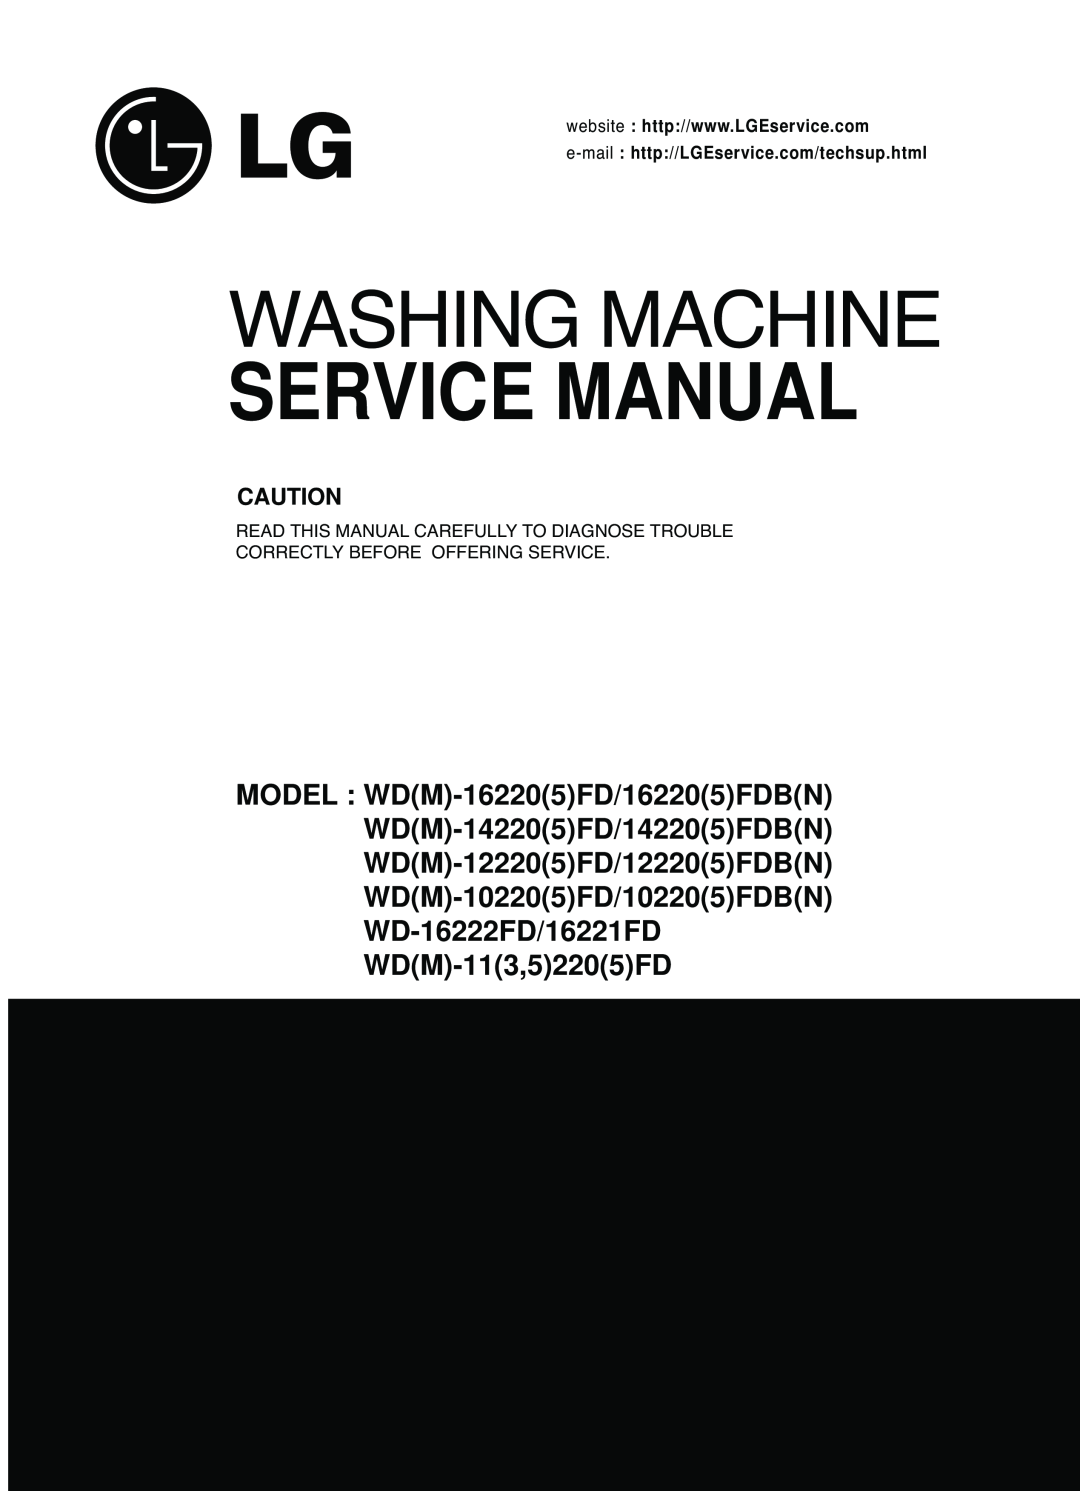 LG Electronics WD(M)-10220(5)FD service manual Washing Machine, Service Manual, e-mail http//LGEservice.com/techsup.html 